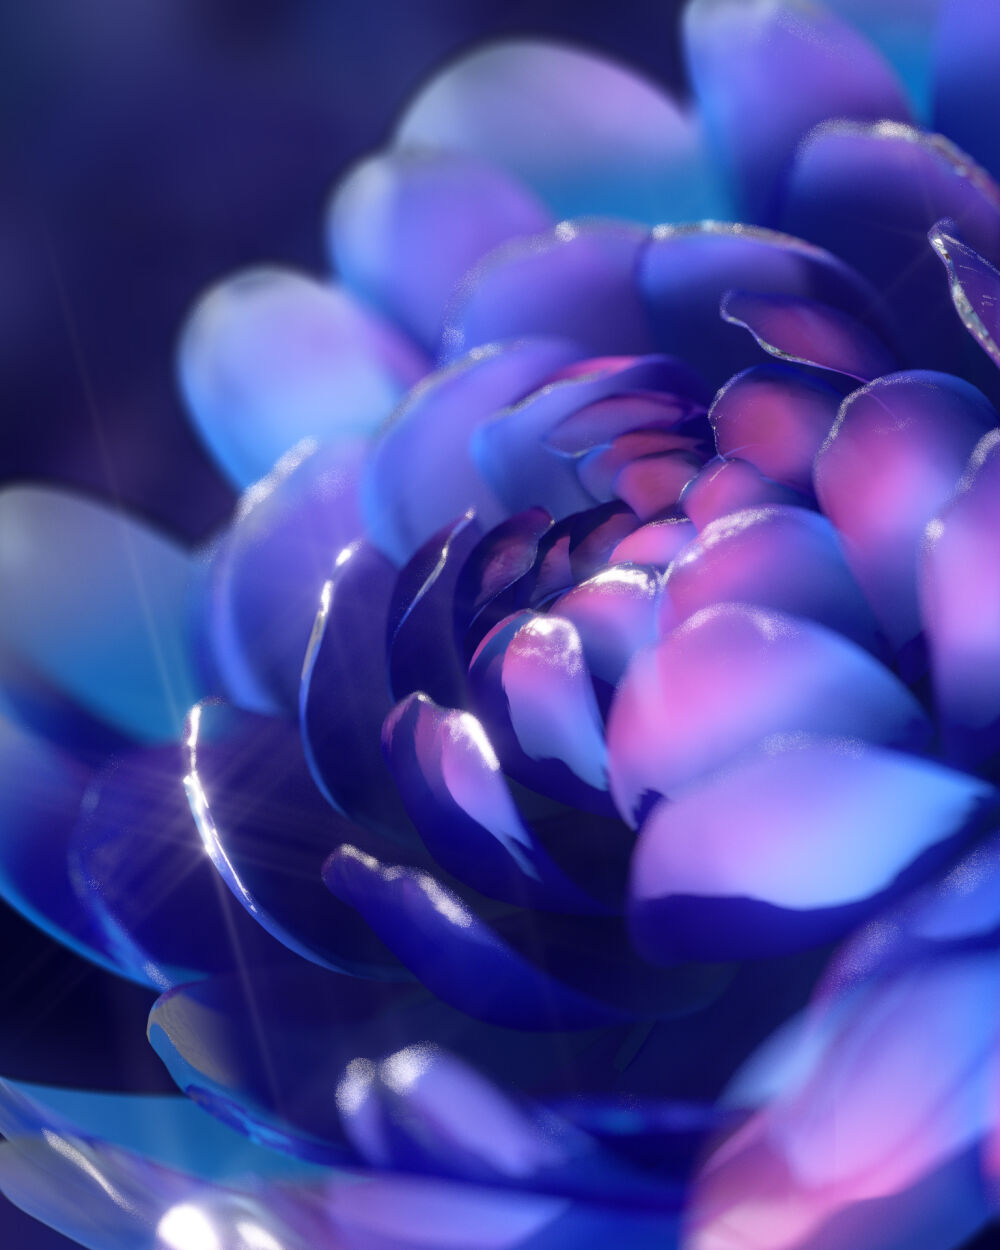 Floral, botanical 3D art by Double Up Studio